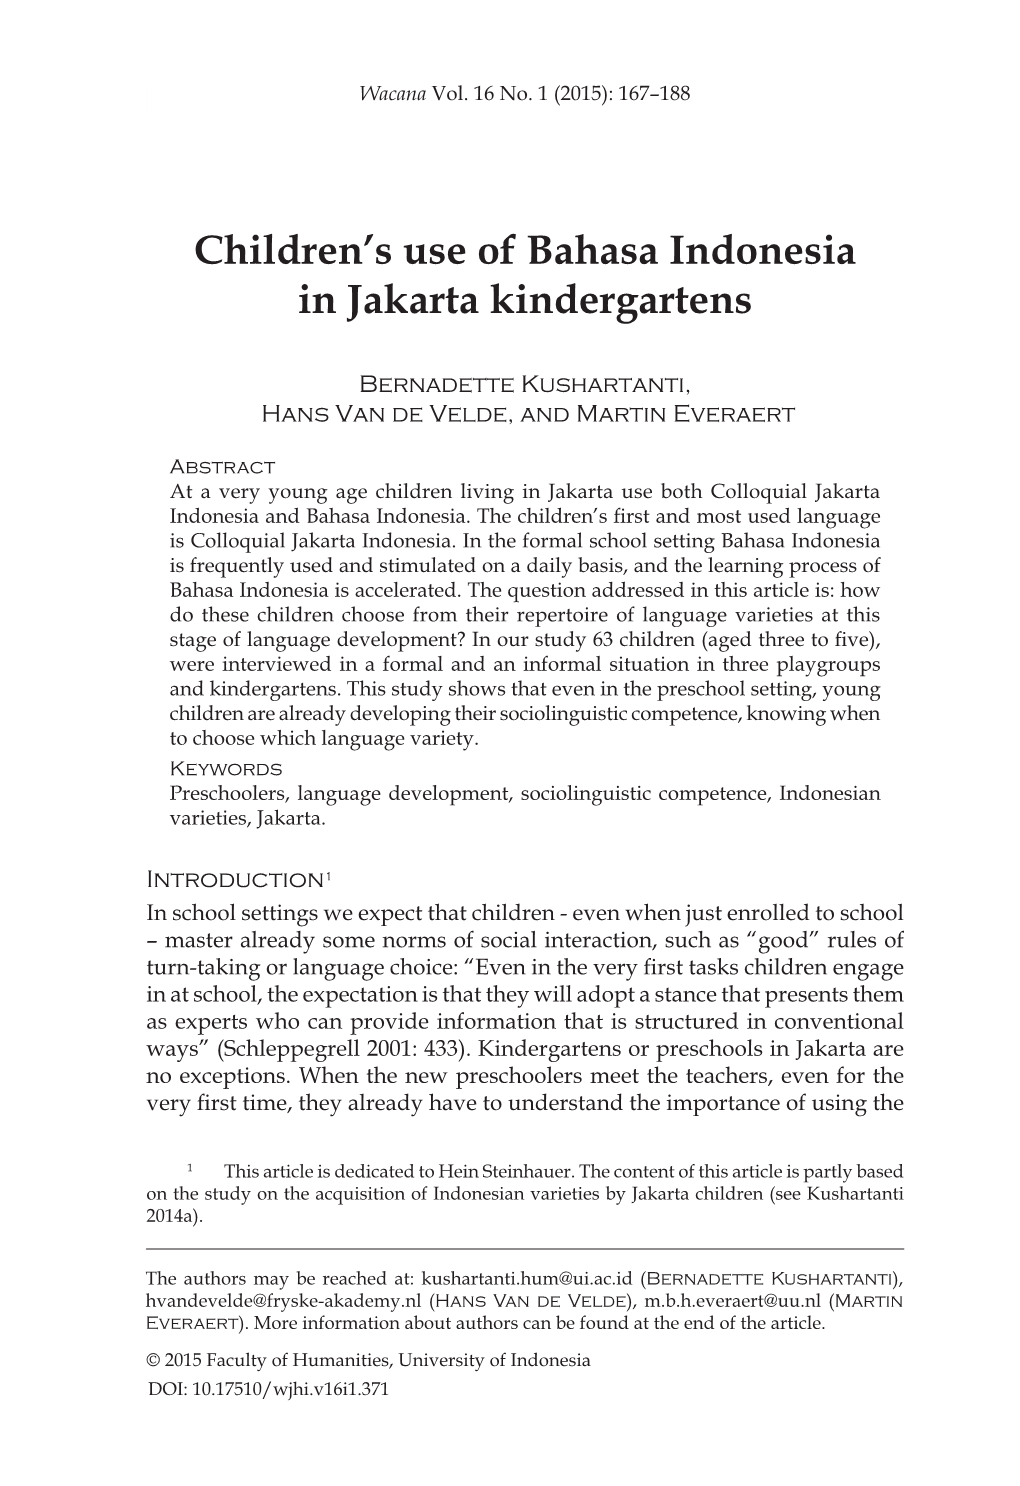 Children's Use of Bahasa Indonesia in Jakarta Kindergartens